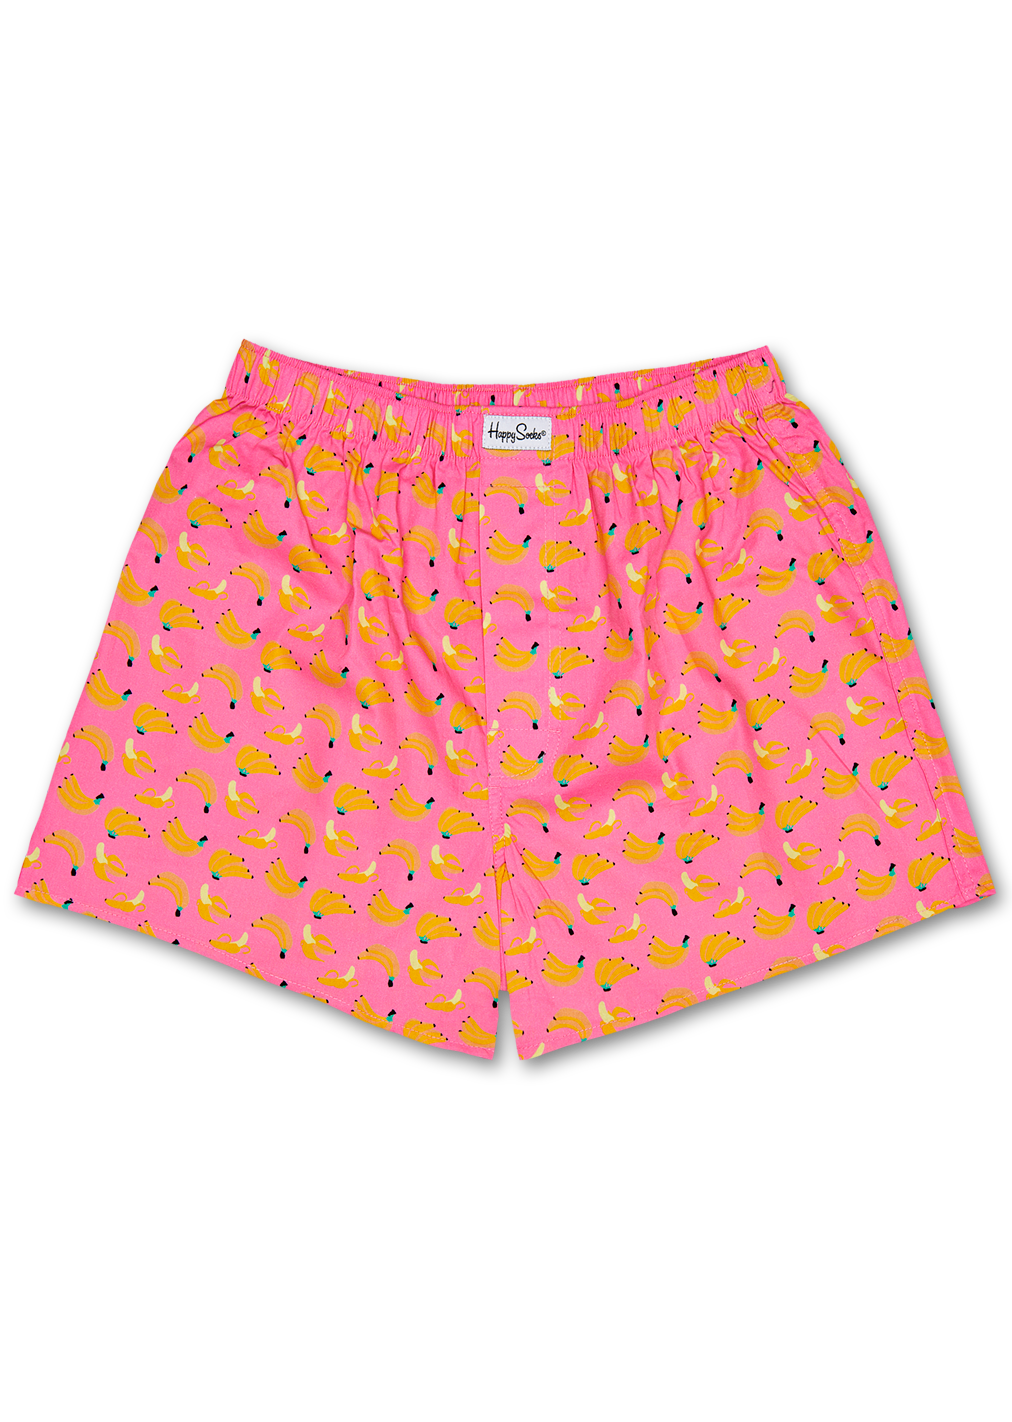 Men’s Underwear Pink: Banana Boxers | Happy Socks